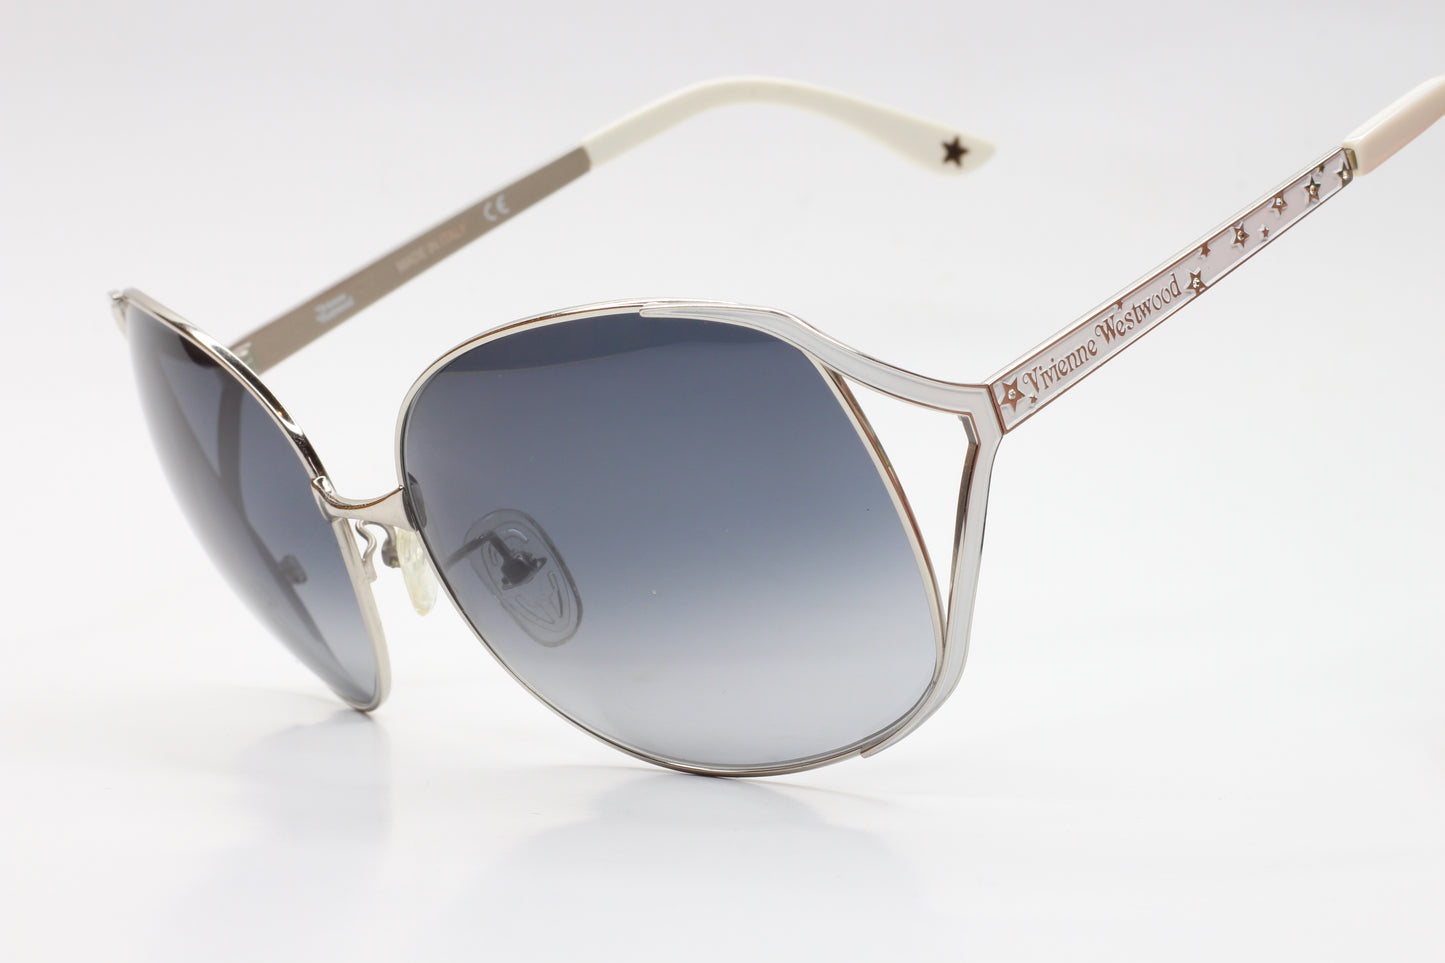 Vivienne Westwood VW713 02 Silver Designer White Metal Luxury Sunglasses - ABC Optical